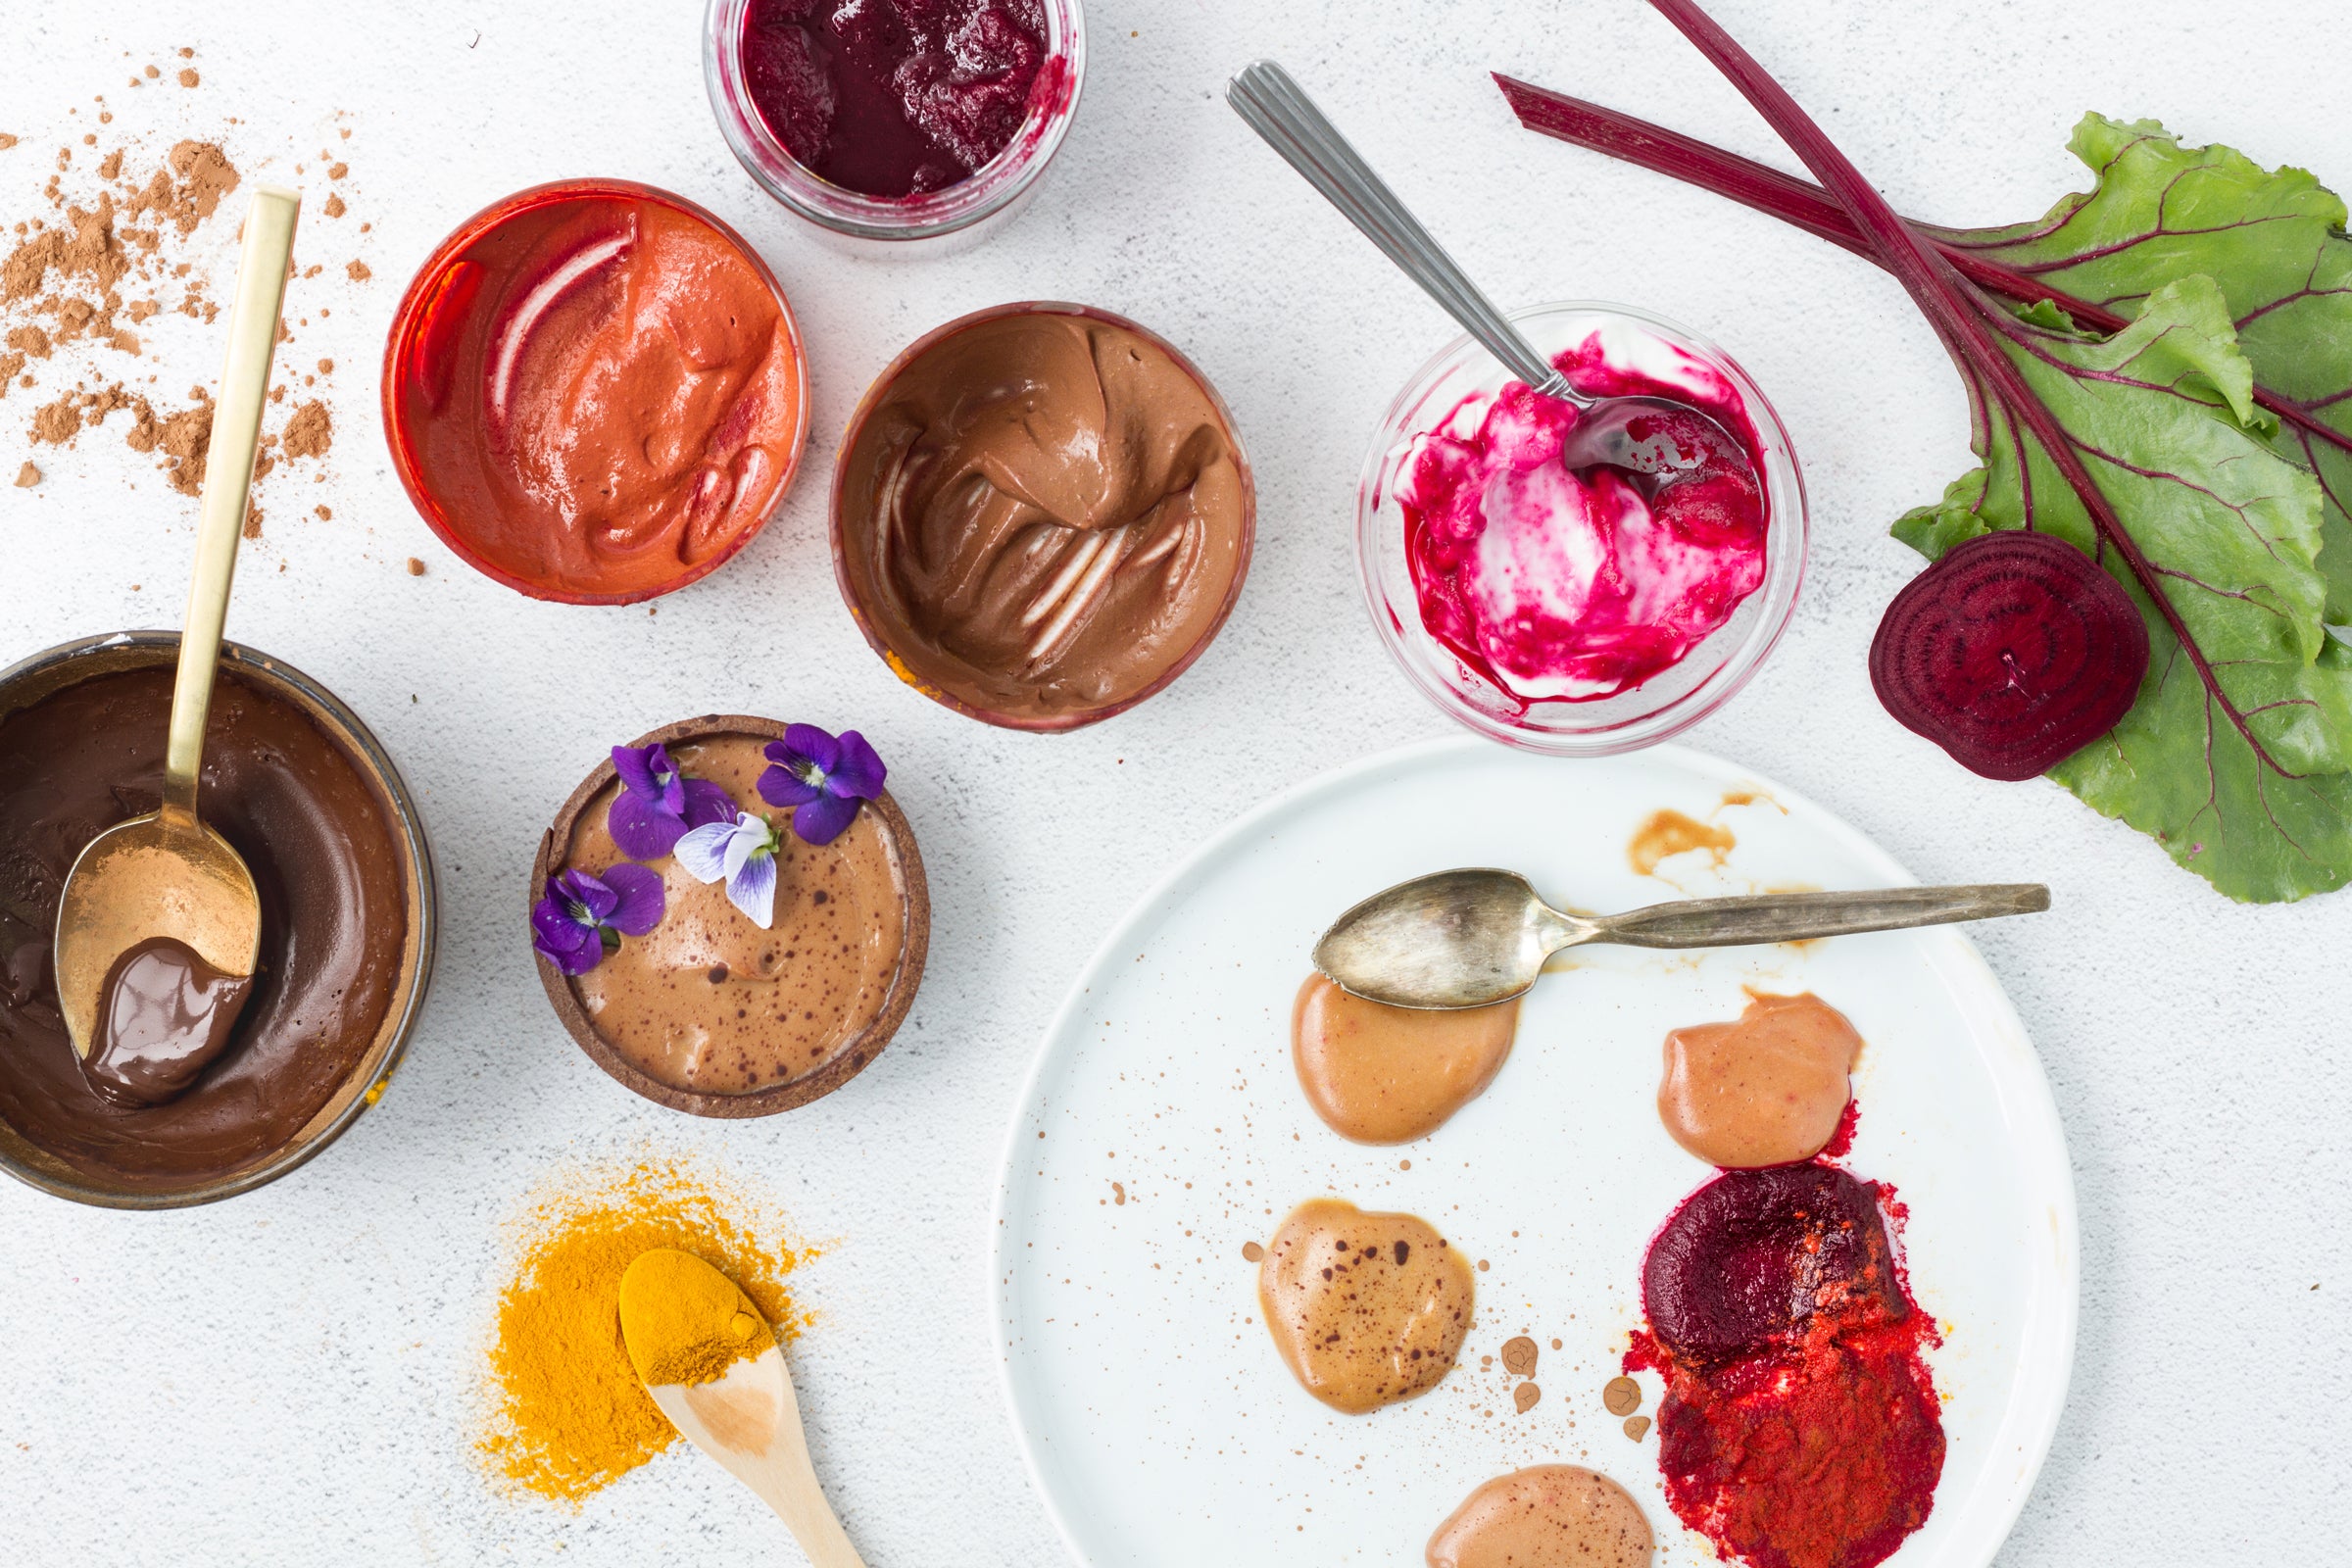 How to make natural food coloring at home - Unpacked